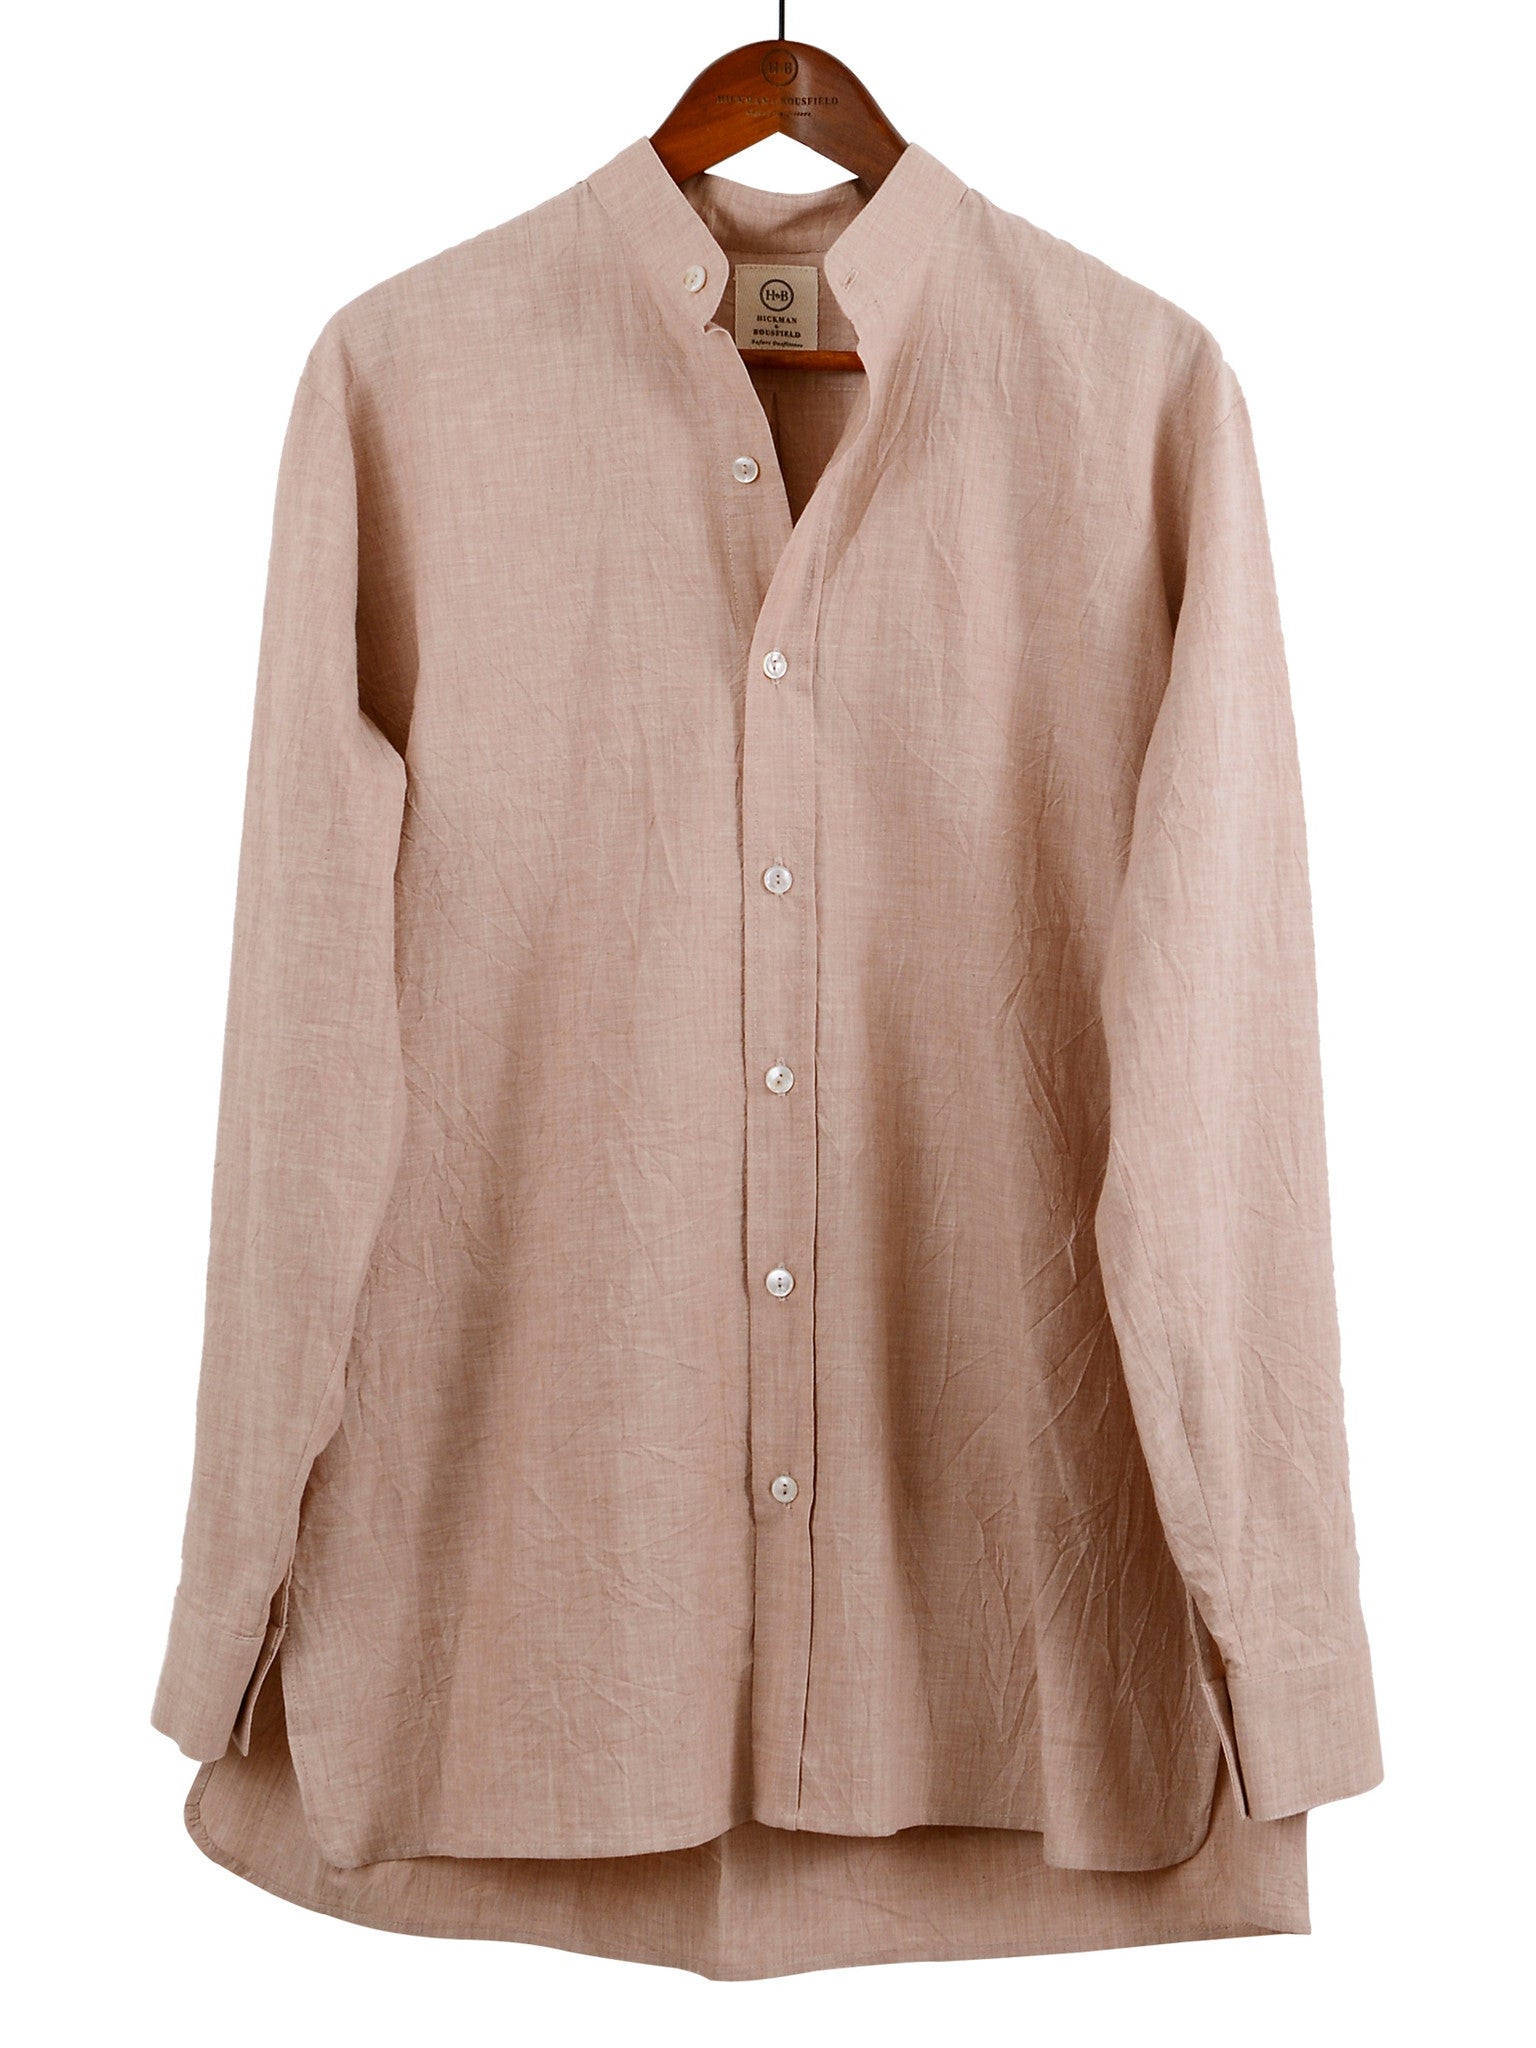 Collarless Shirt in Rose, Shirt, Hickman & Bousfield - Hickman & Bousfield, Safari and Travel Clothing